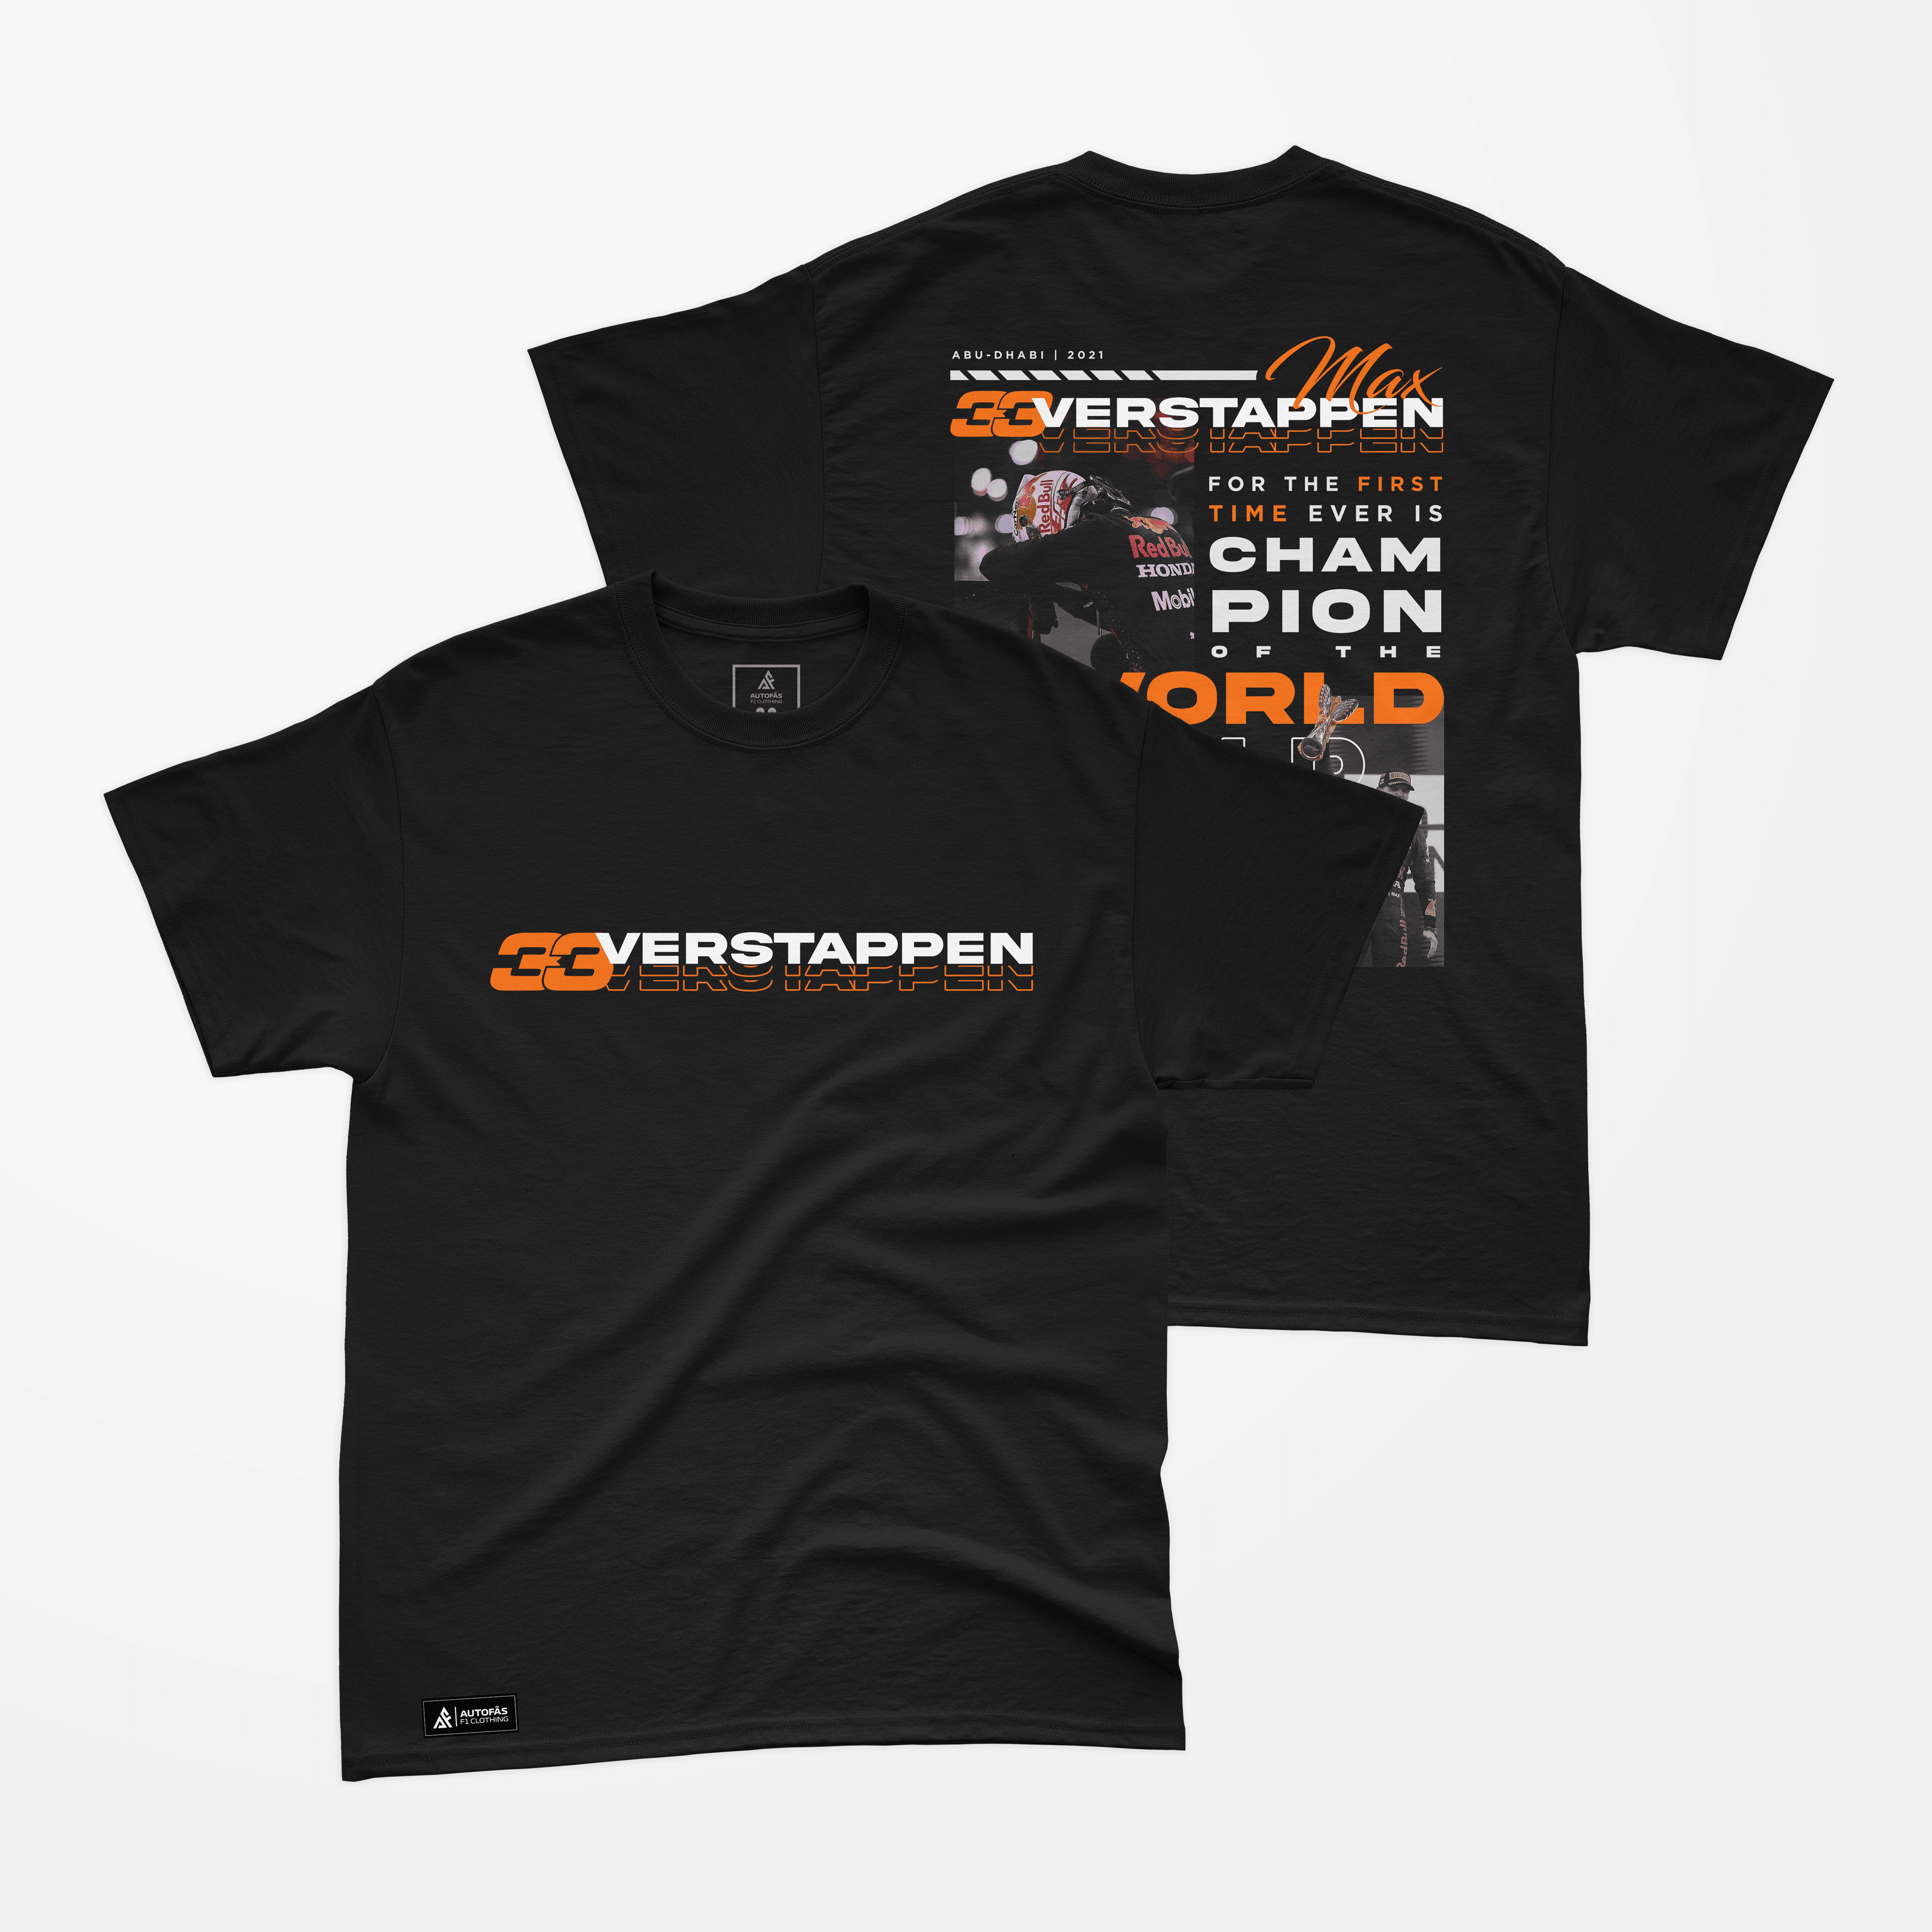 Camiseta Moments Max Verstappen World Champion - Autofãs Store